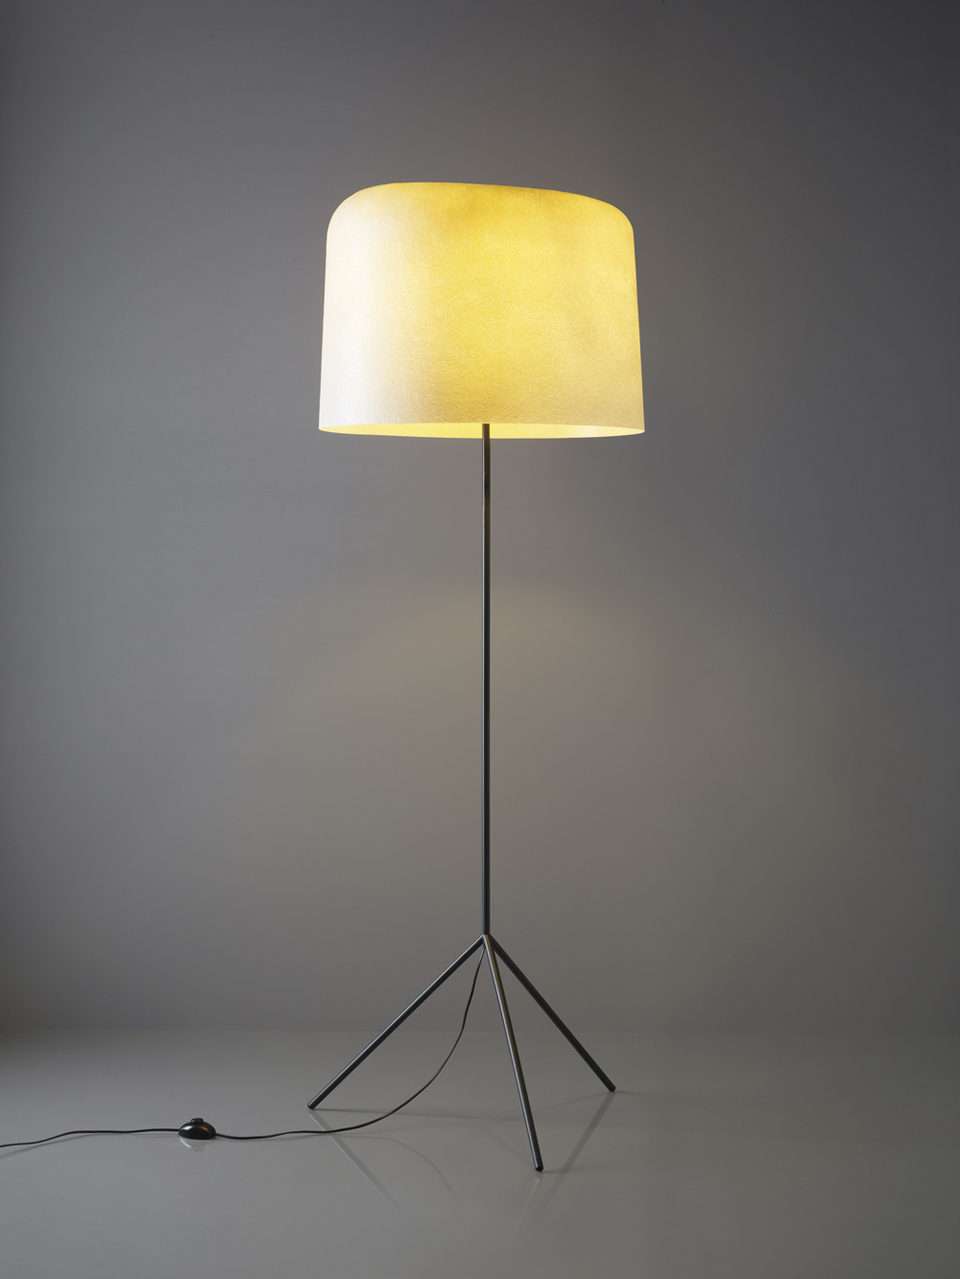 Ola white floor lamp in fiberglass: karboxx luminaires Design en fibre de verre - Réf. 19050214 - mobile